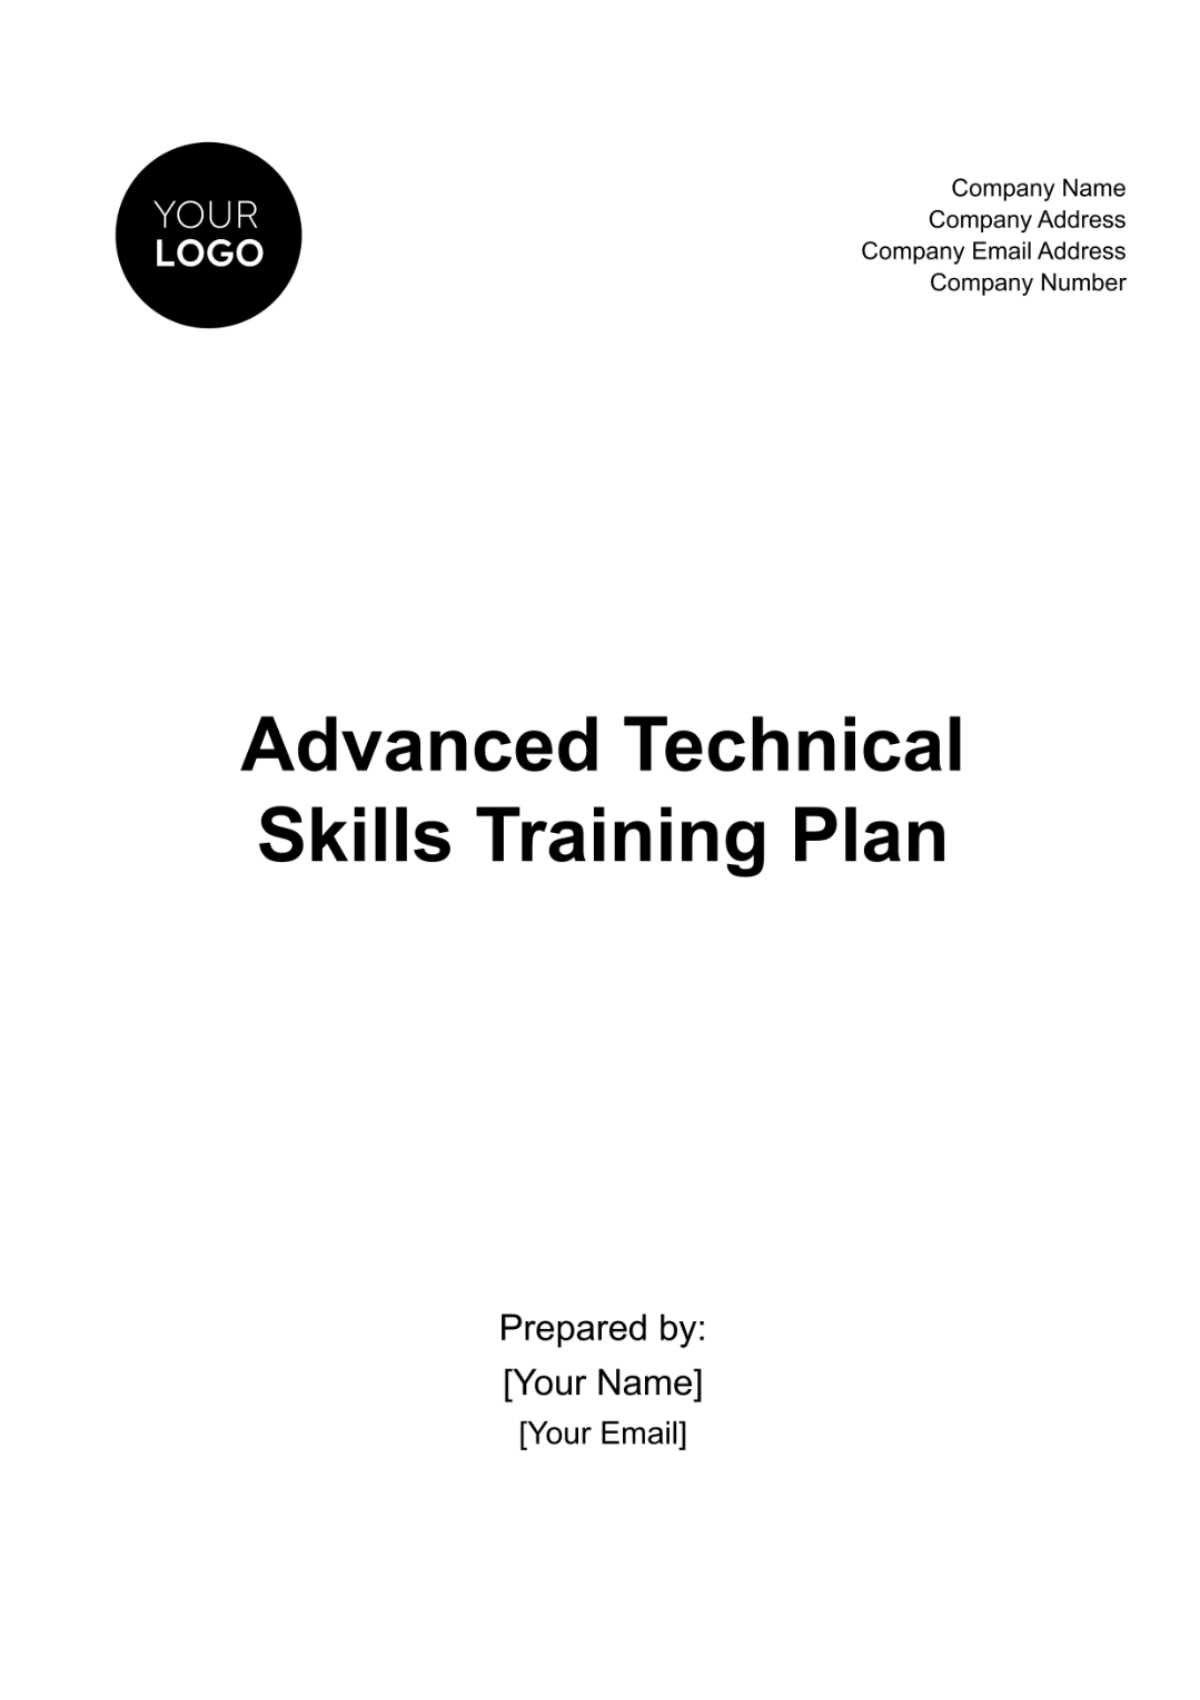 Free Advanced Technical Skills Training Plan HR Template